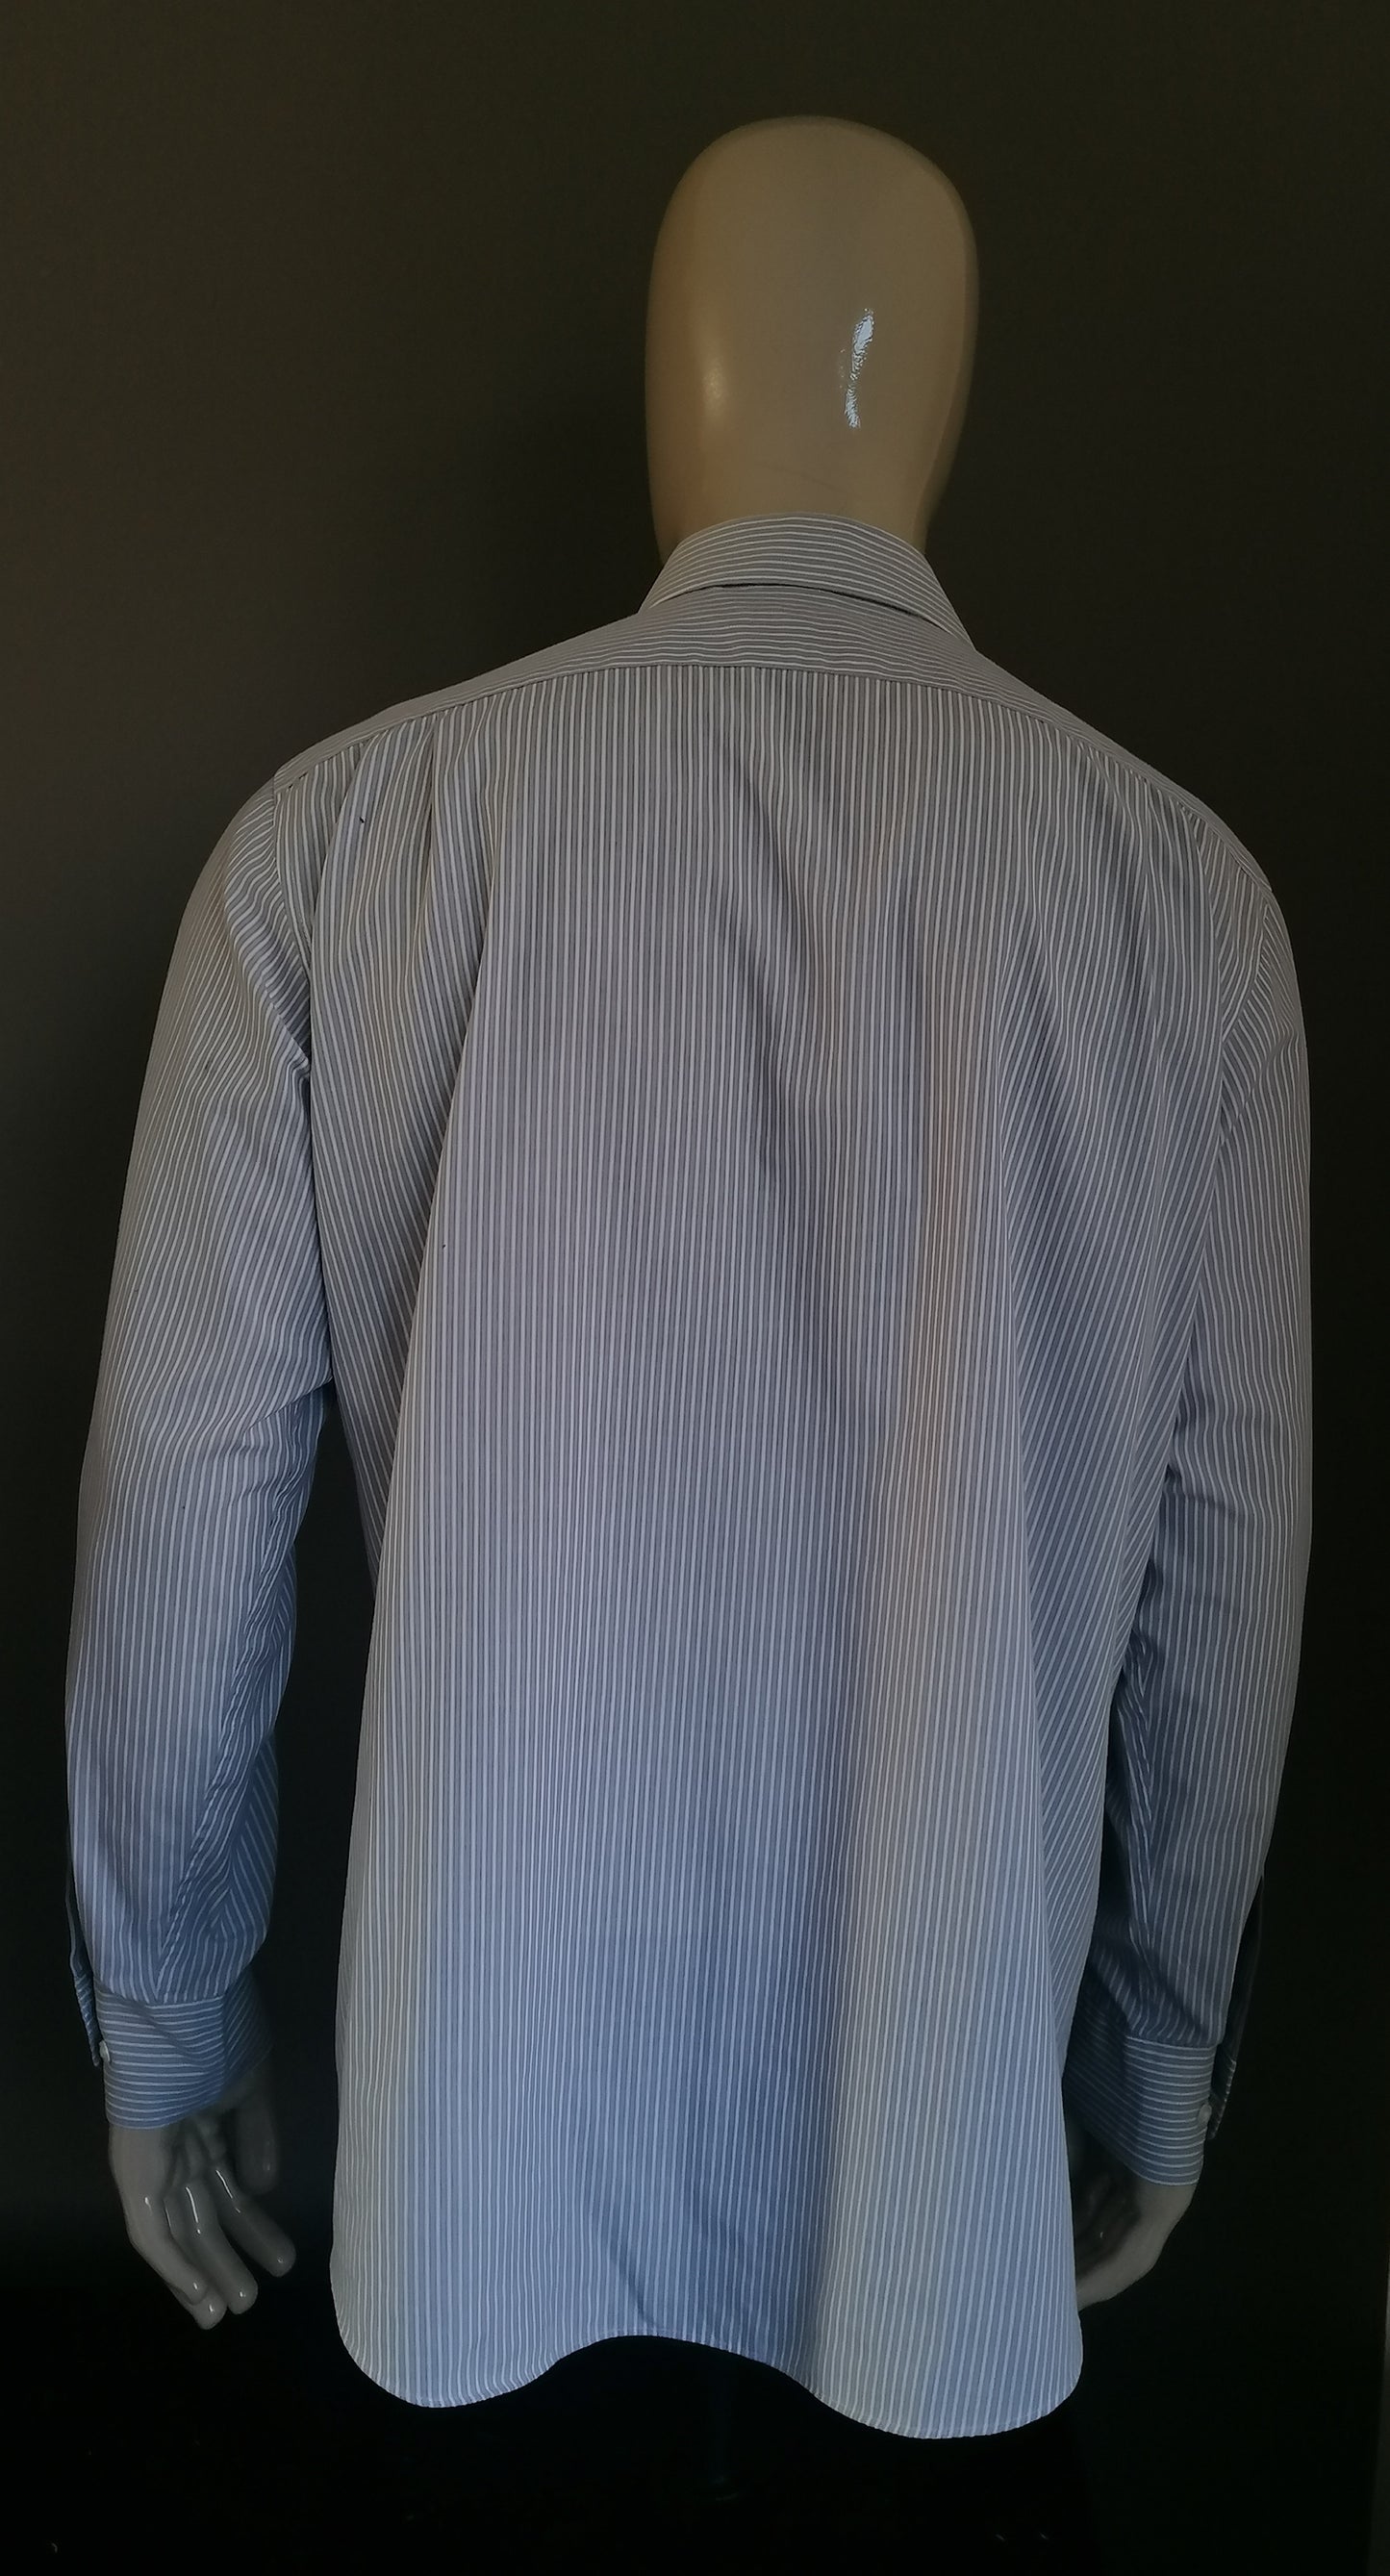 M&S Man (Marks & Spencer) overhemd. Grijs Wit gestreept. Maat 43 / XL. Regular Fit.